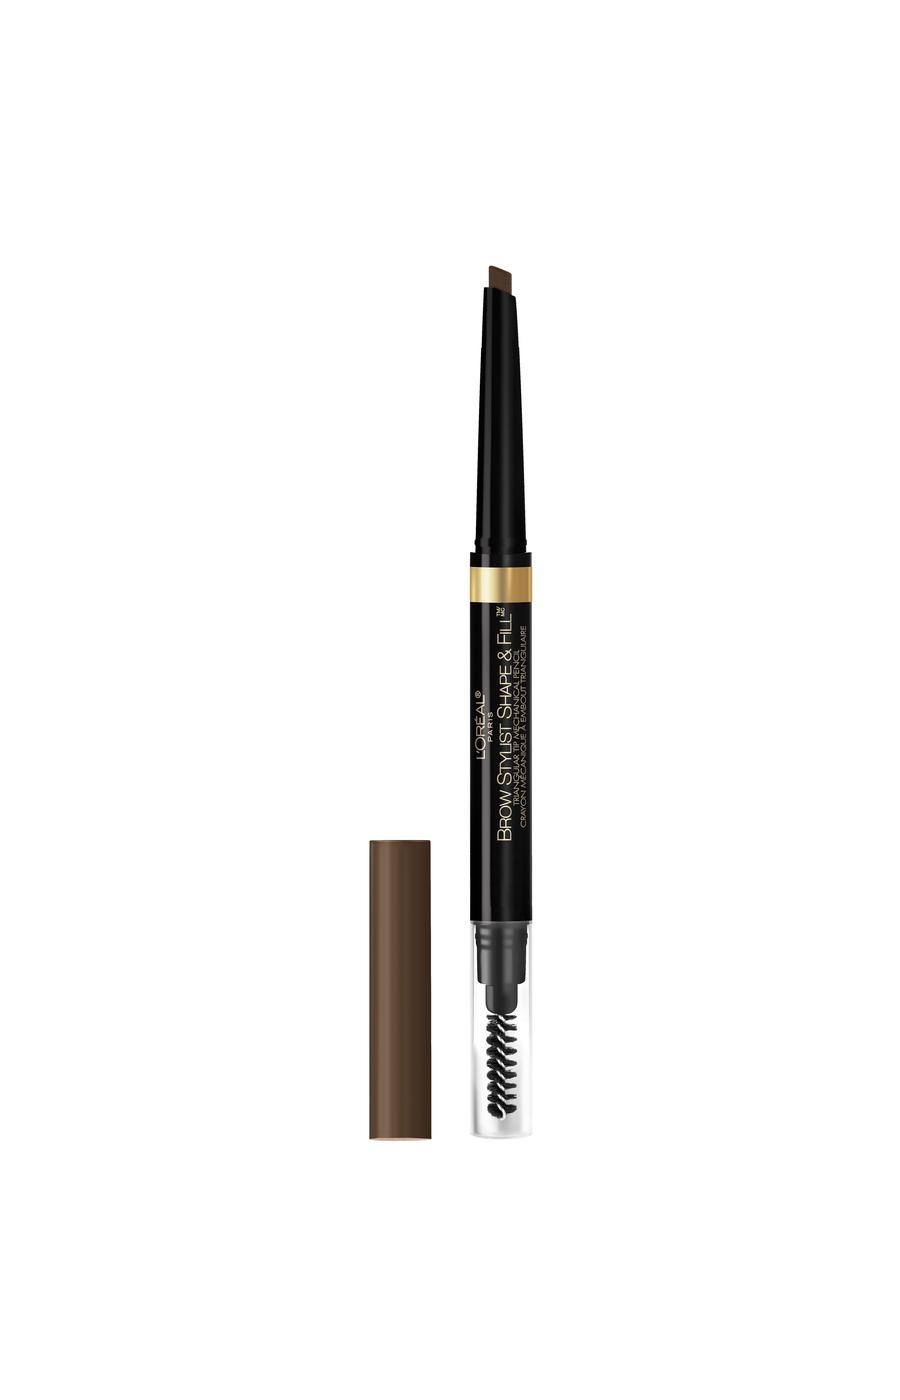 L'Oréal Paris Brow Stylist Shape and Fill Mechanical Eye Brow Makeup Pencil Dark Brunette; image 2 of 2